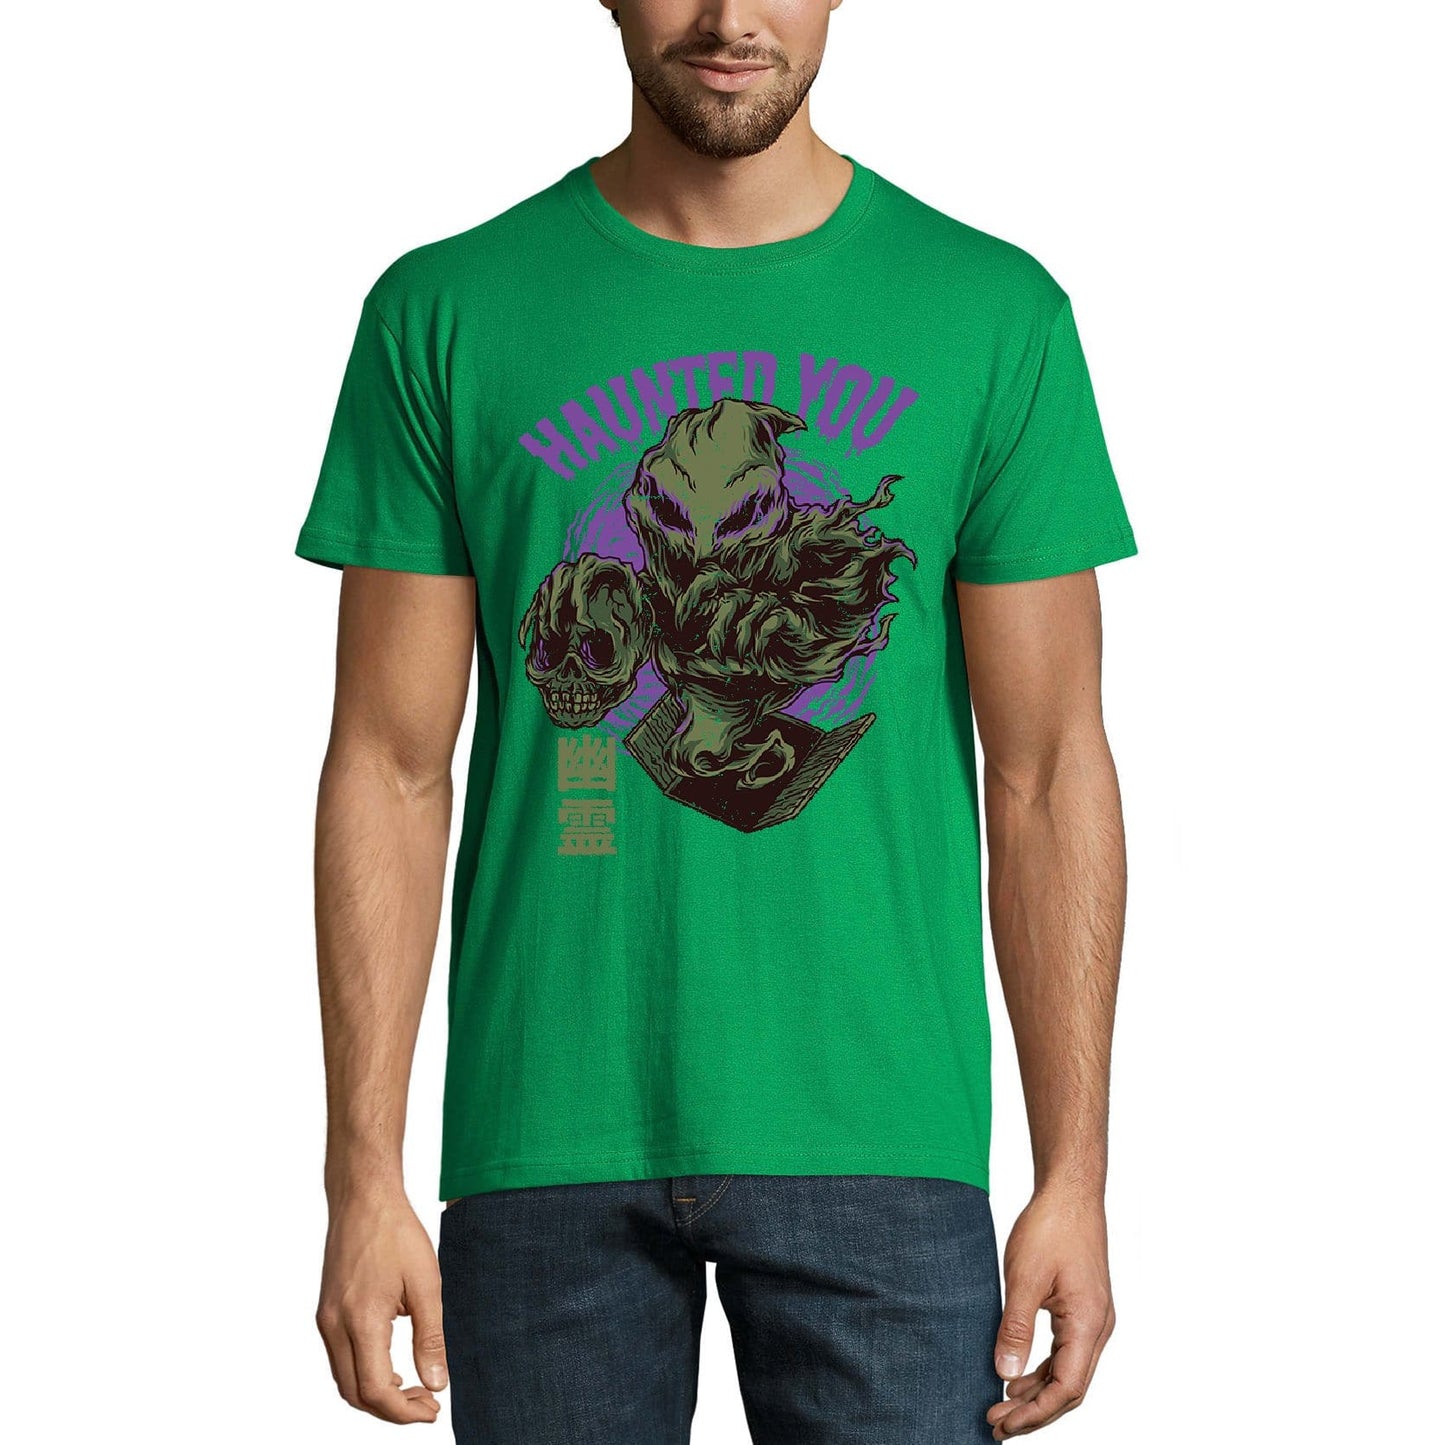 ULTRABASIC Men's Novelty T-Shirt Haunted You - Scary Short Sleeve Tee Shirt